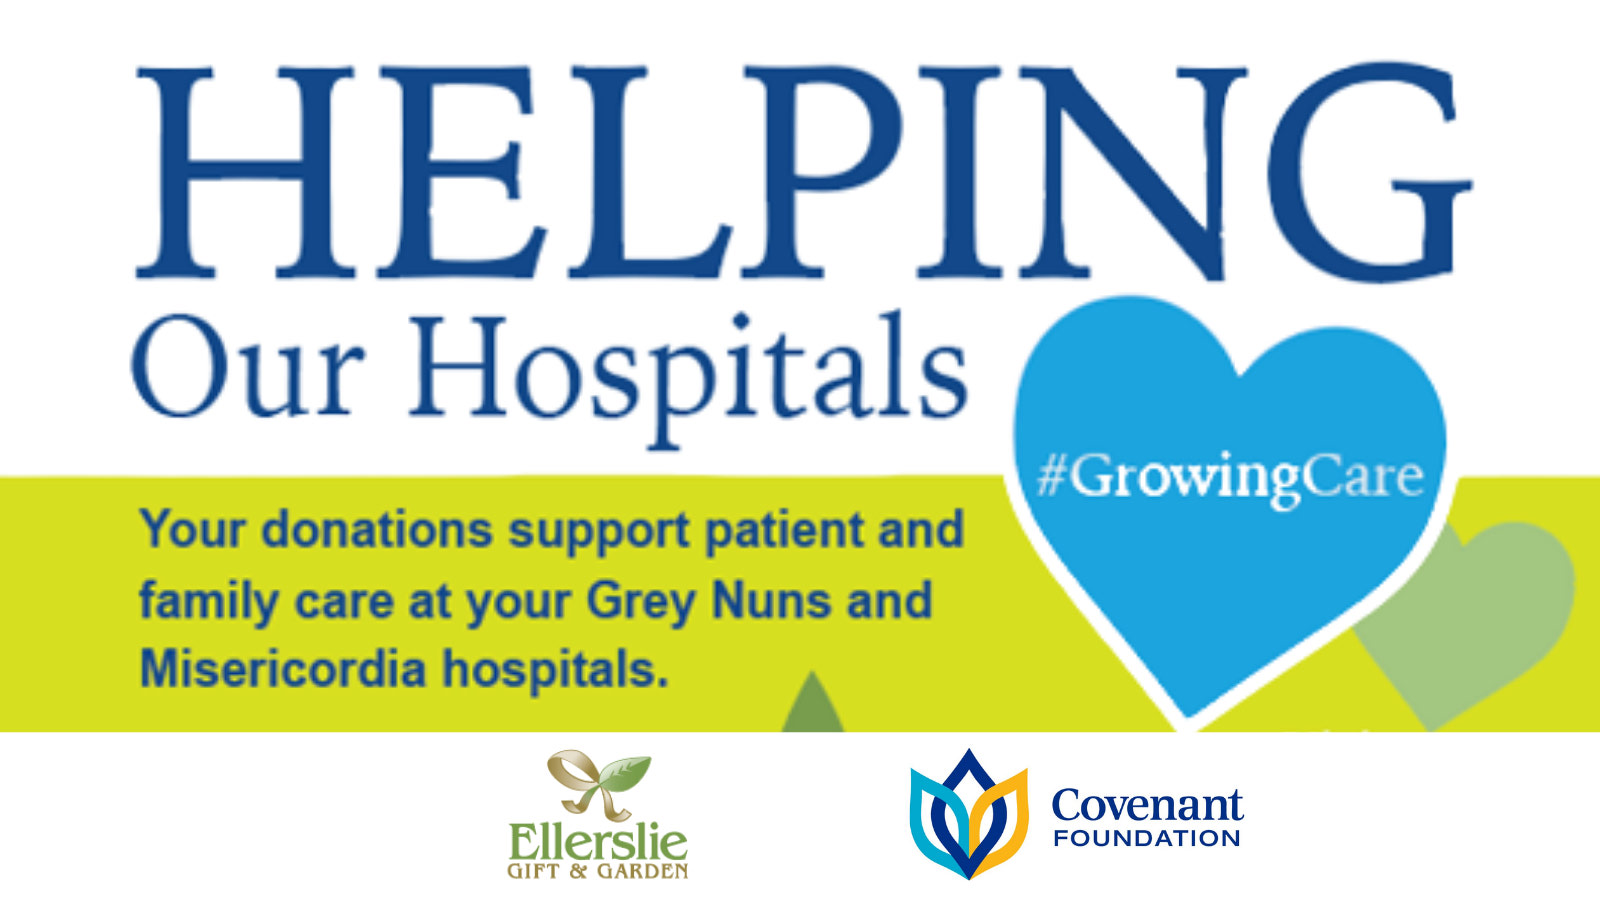 #GrowingCare for the Grey Nuns & Misericordia Hospitals